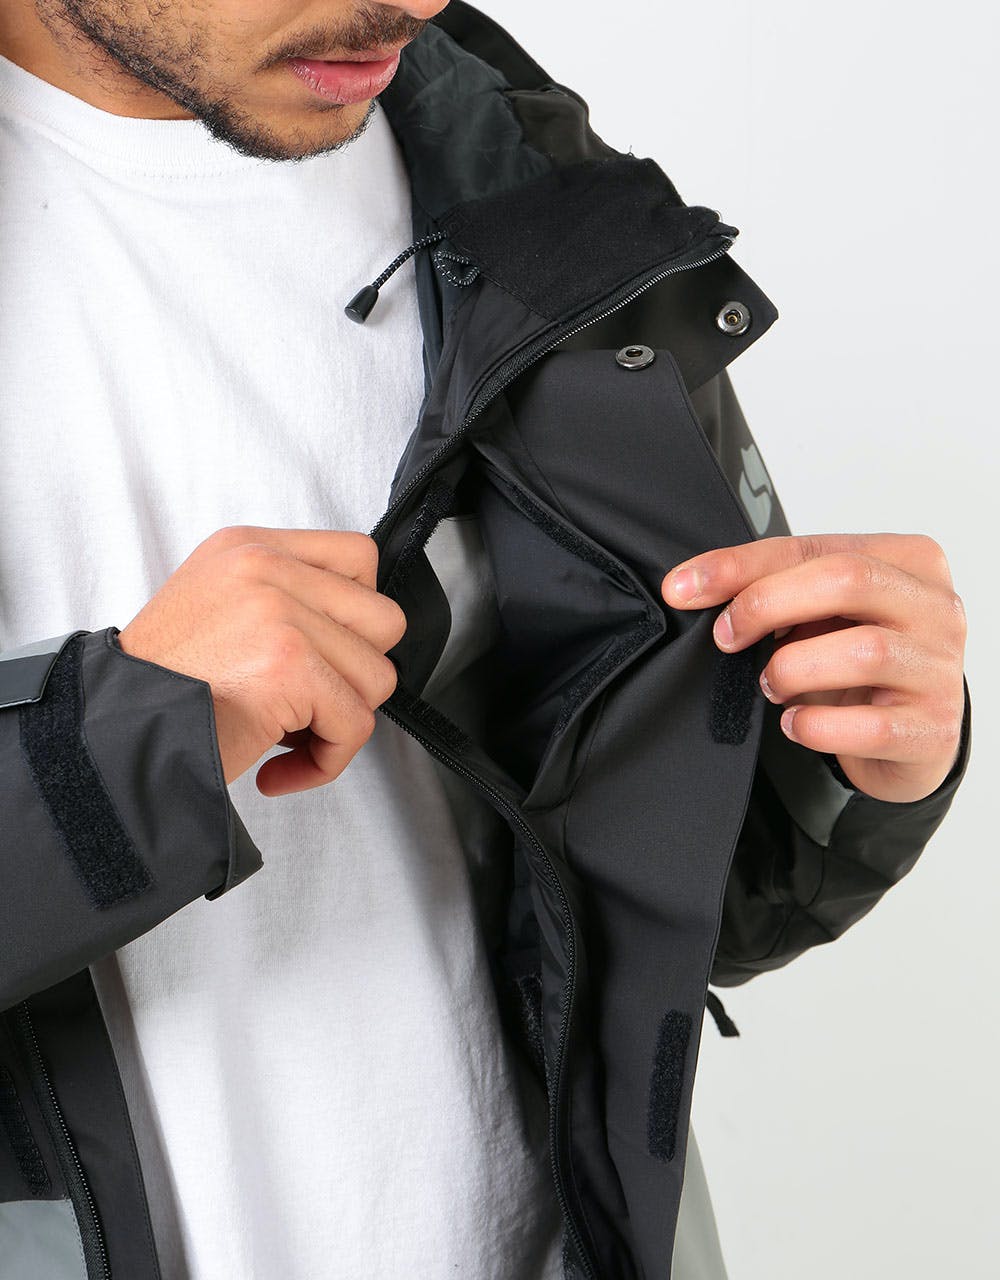 Bonfire Ether Insulated 2020 Snowboard Jacket - Black